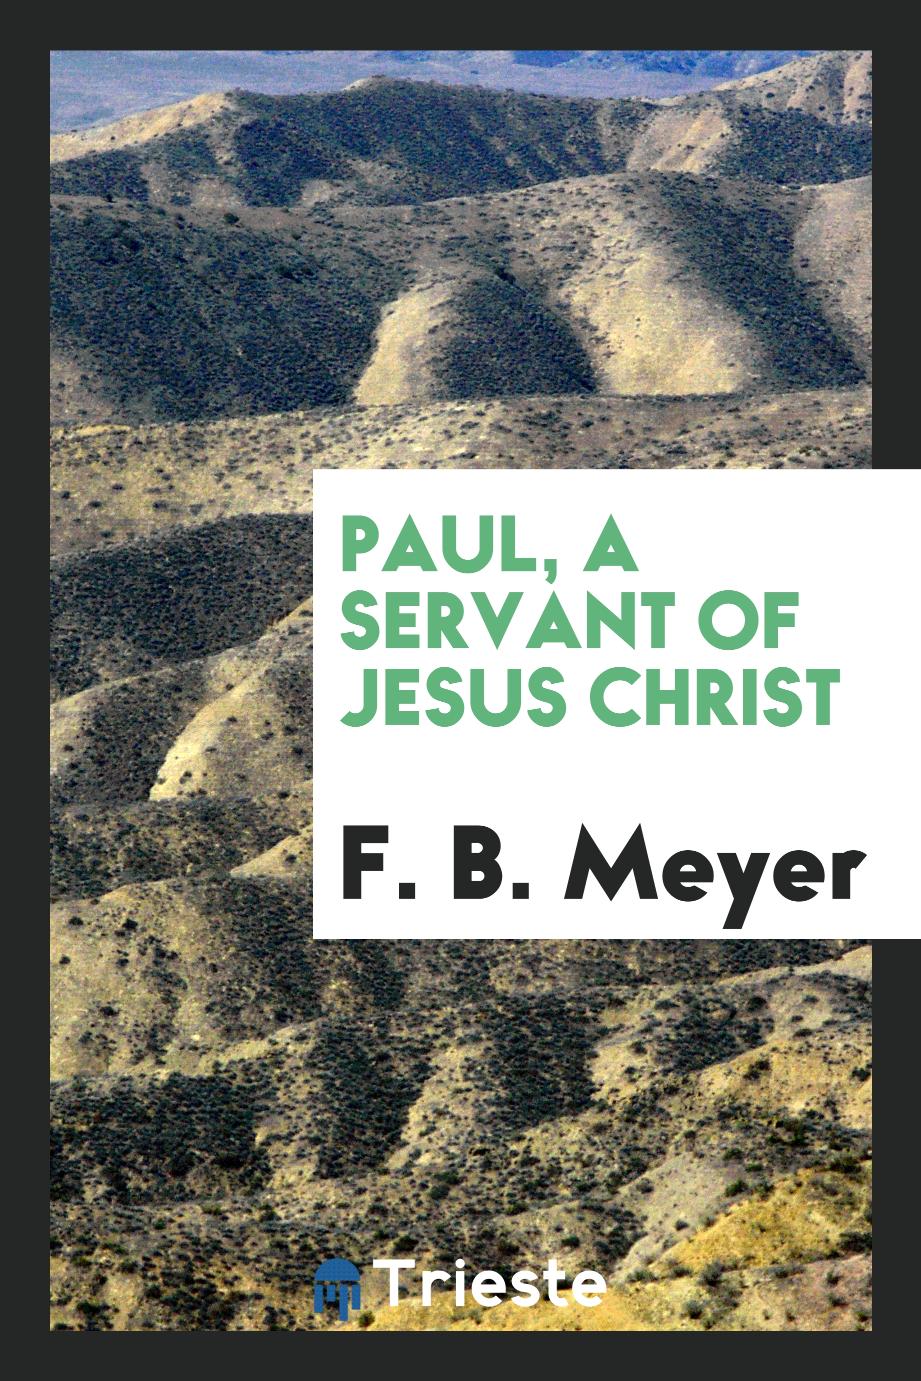 Paul, a servant of Jesus Christ